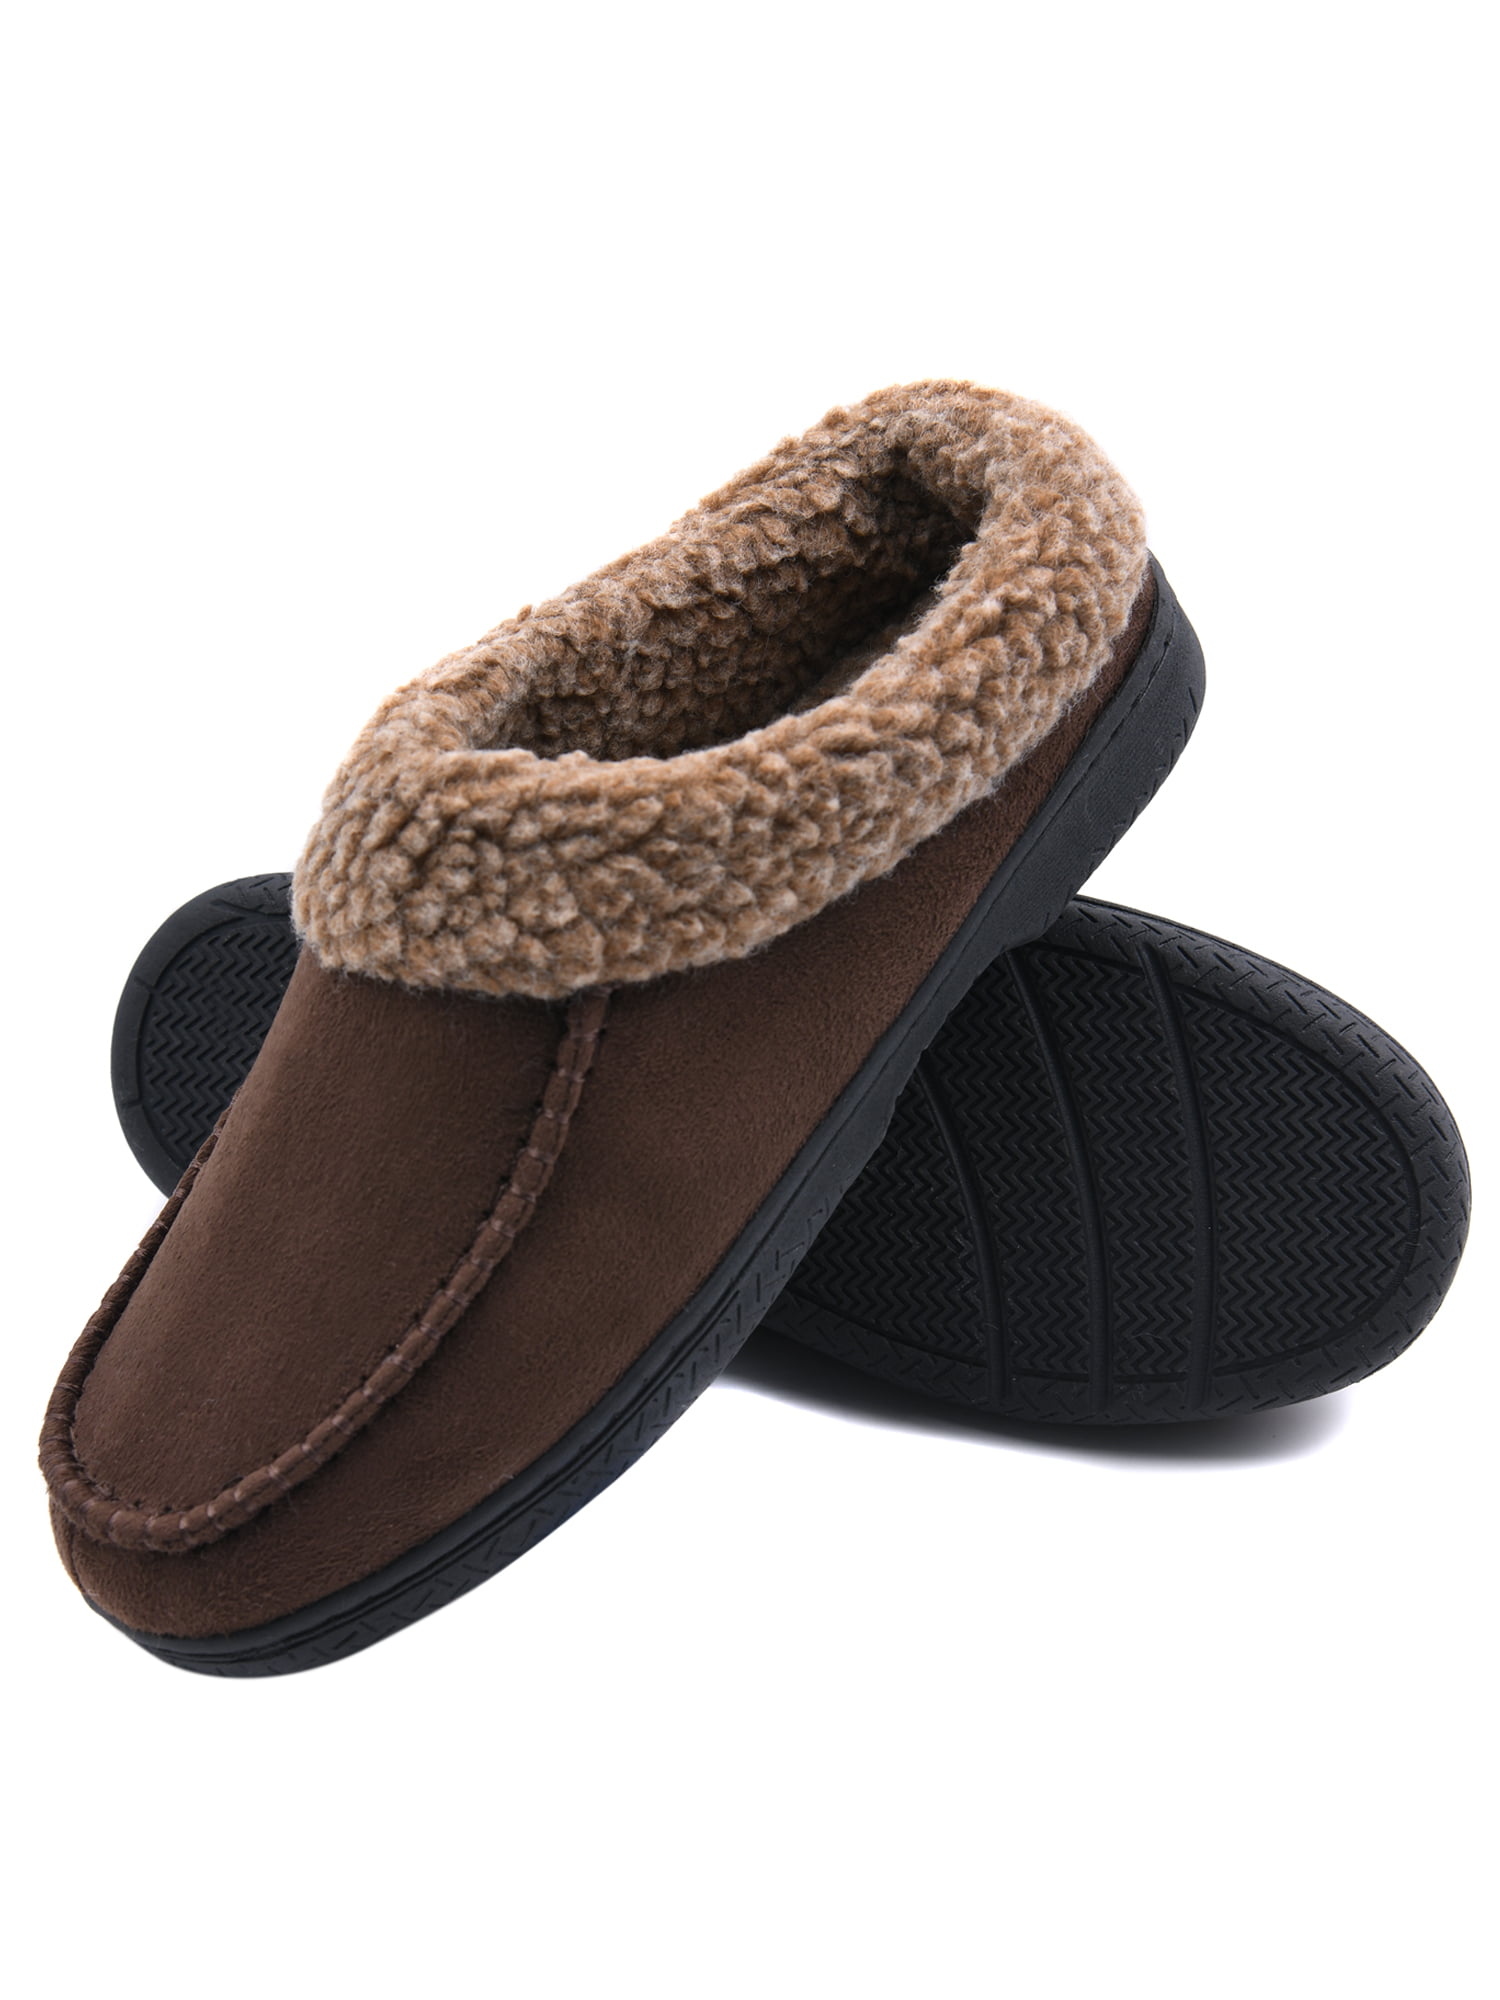 LORDFON Memory Foam Mens Slippers Slip-On Comfy House Slippers for Men Indoor Outdoor Non-Slip Warm Winter Men’s Bedroom Slippers Size 